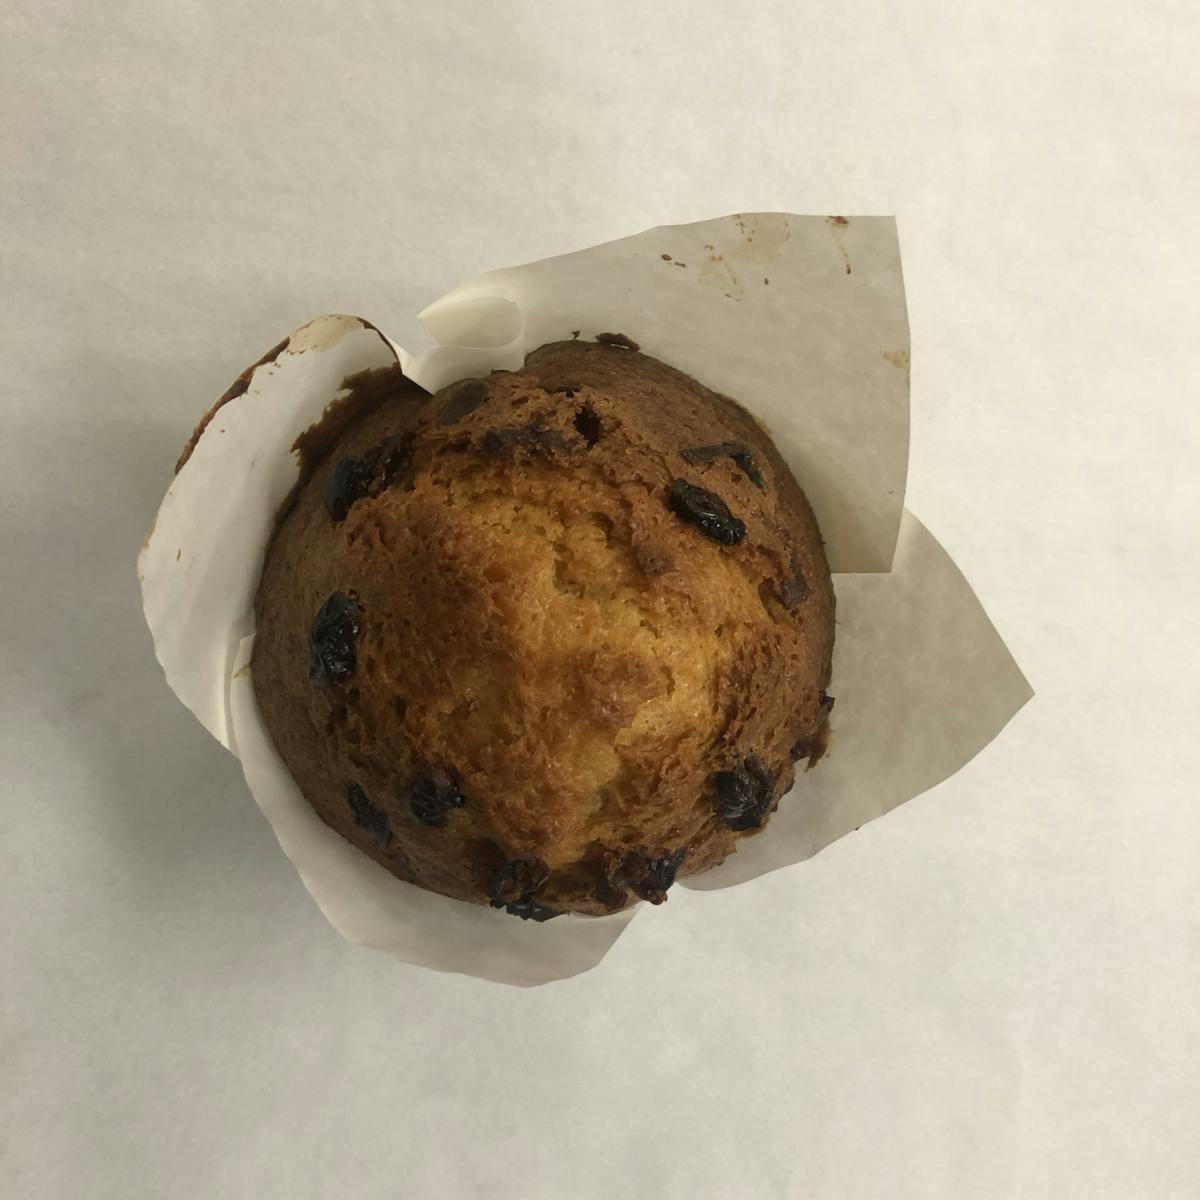 a muffin with raisins